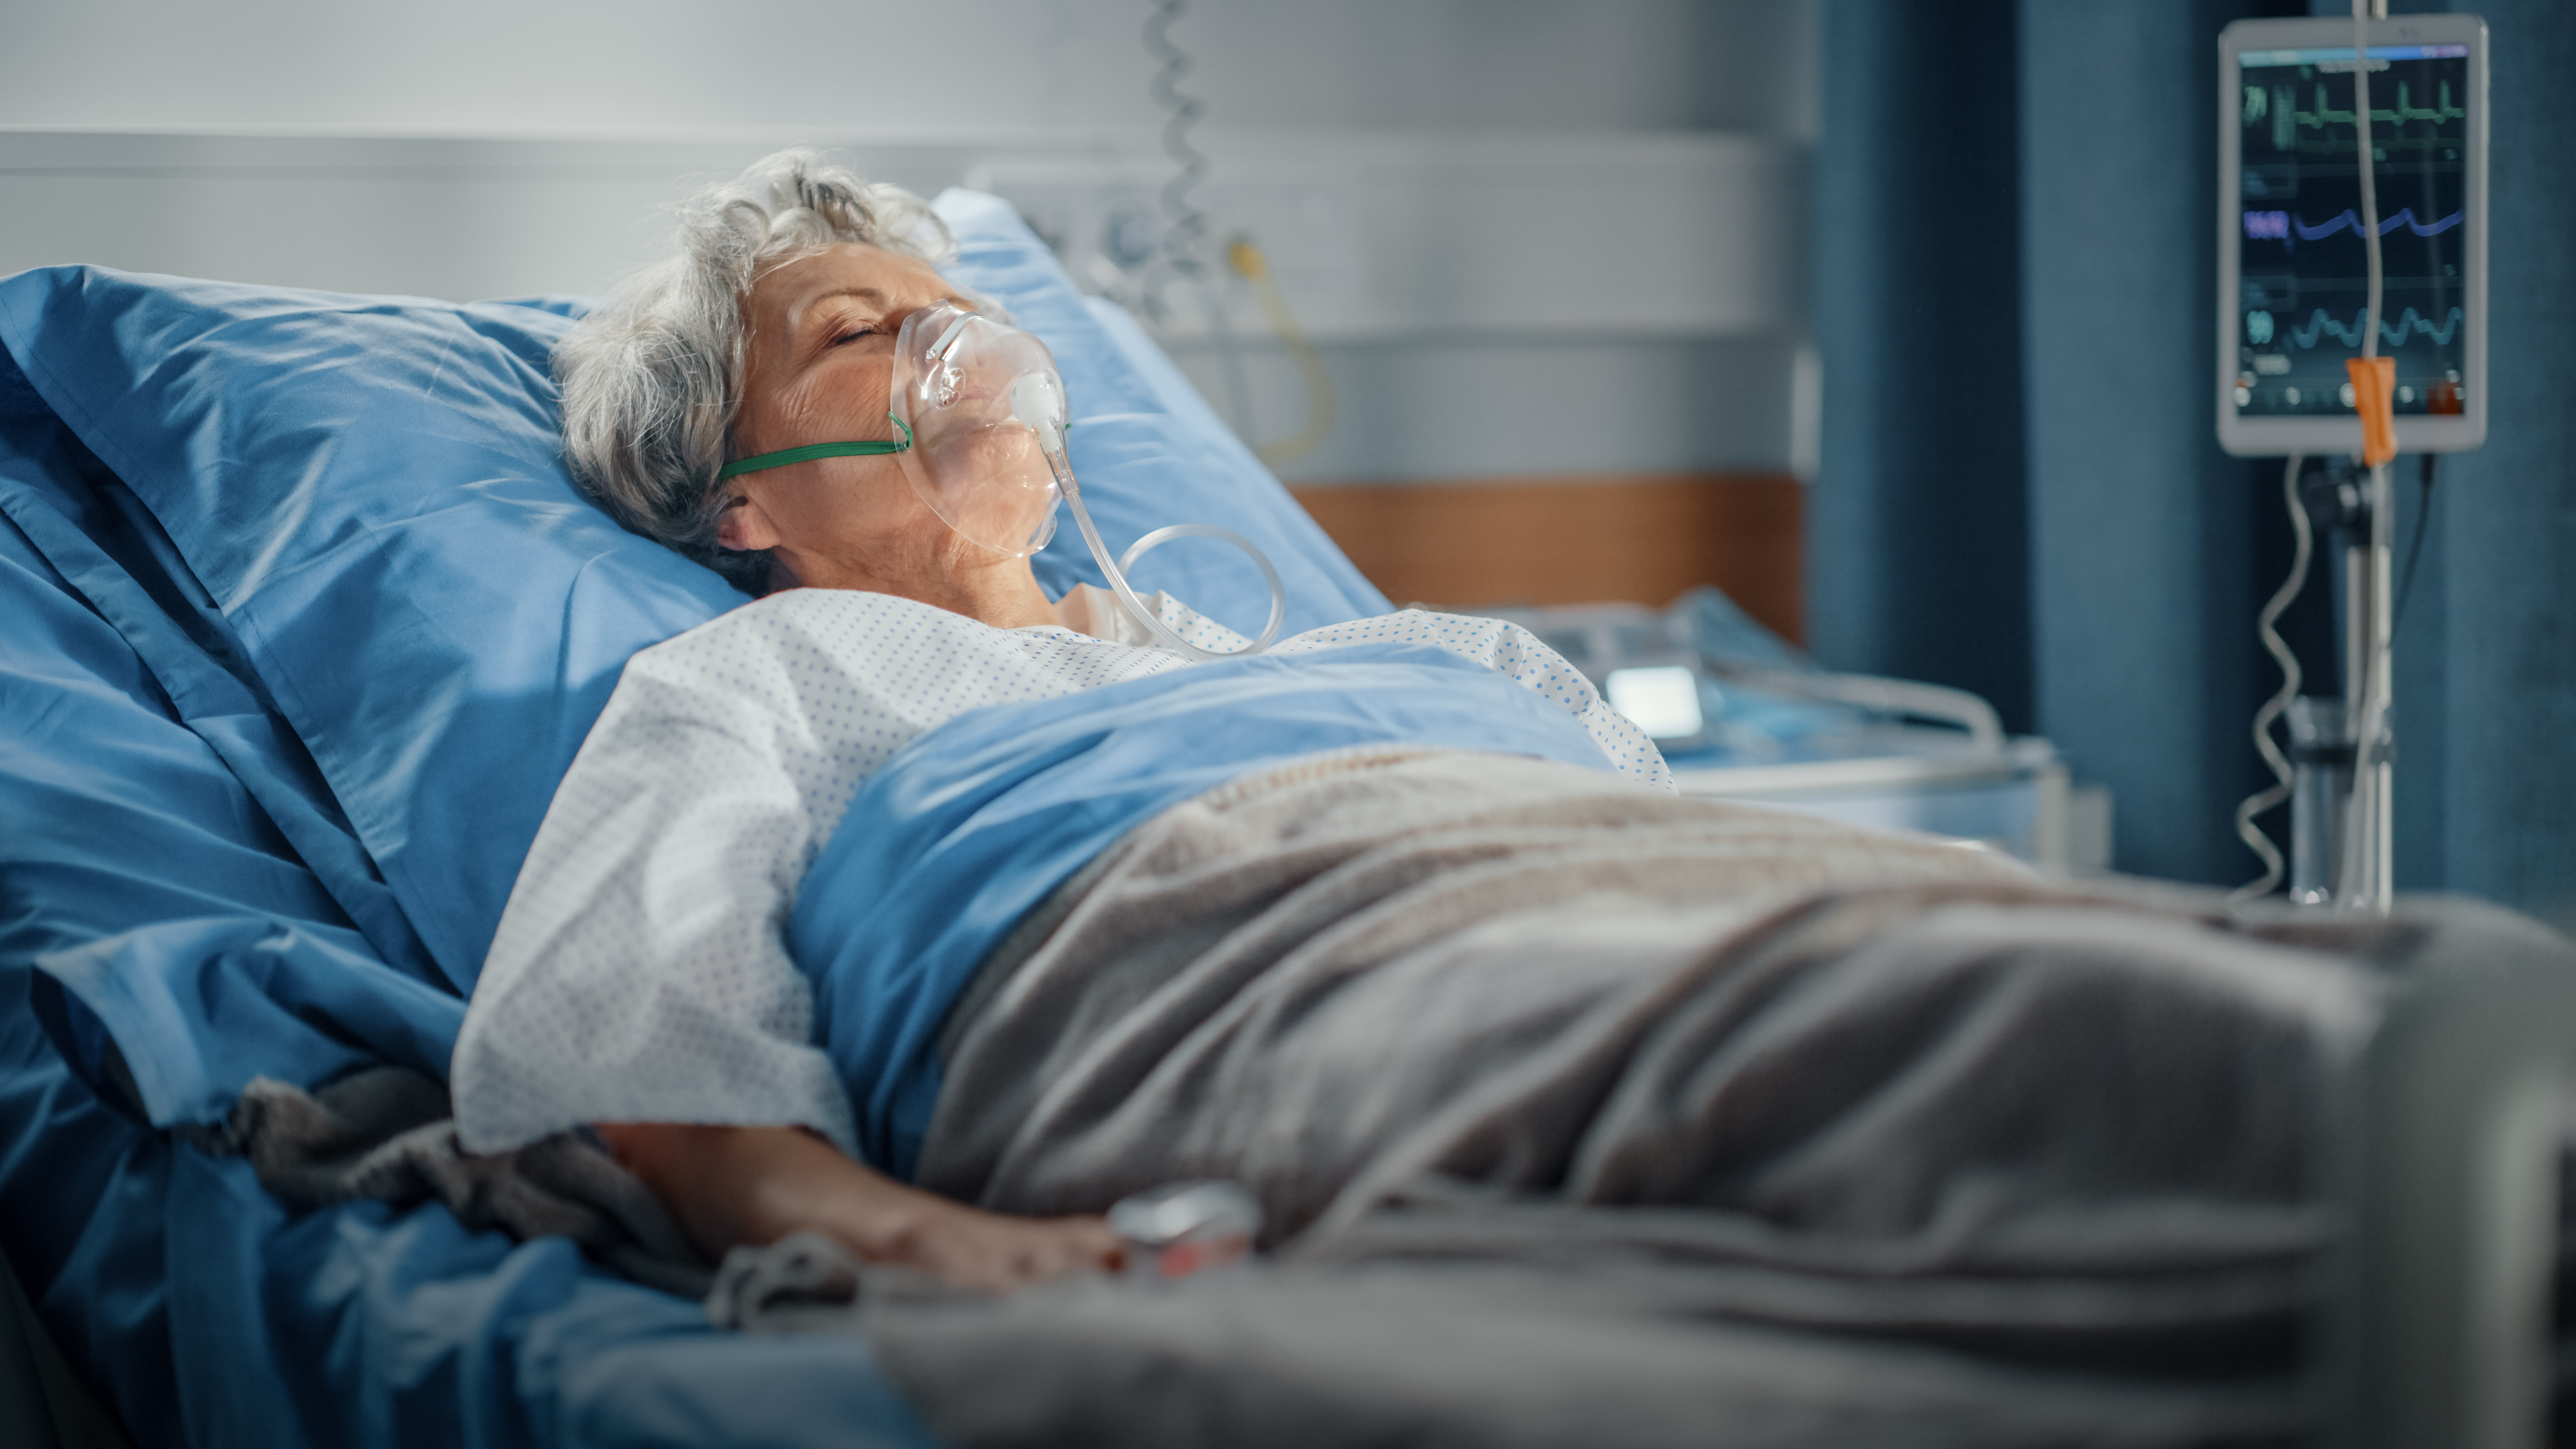 Femme âgée dans un lit d'hôpital | Source : Shutterstock